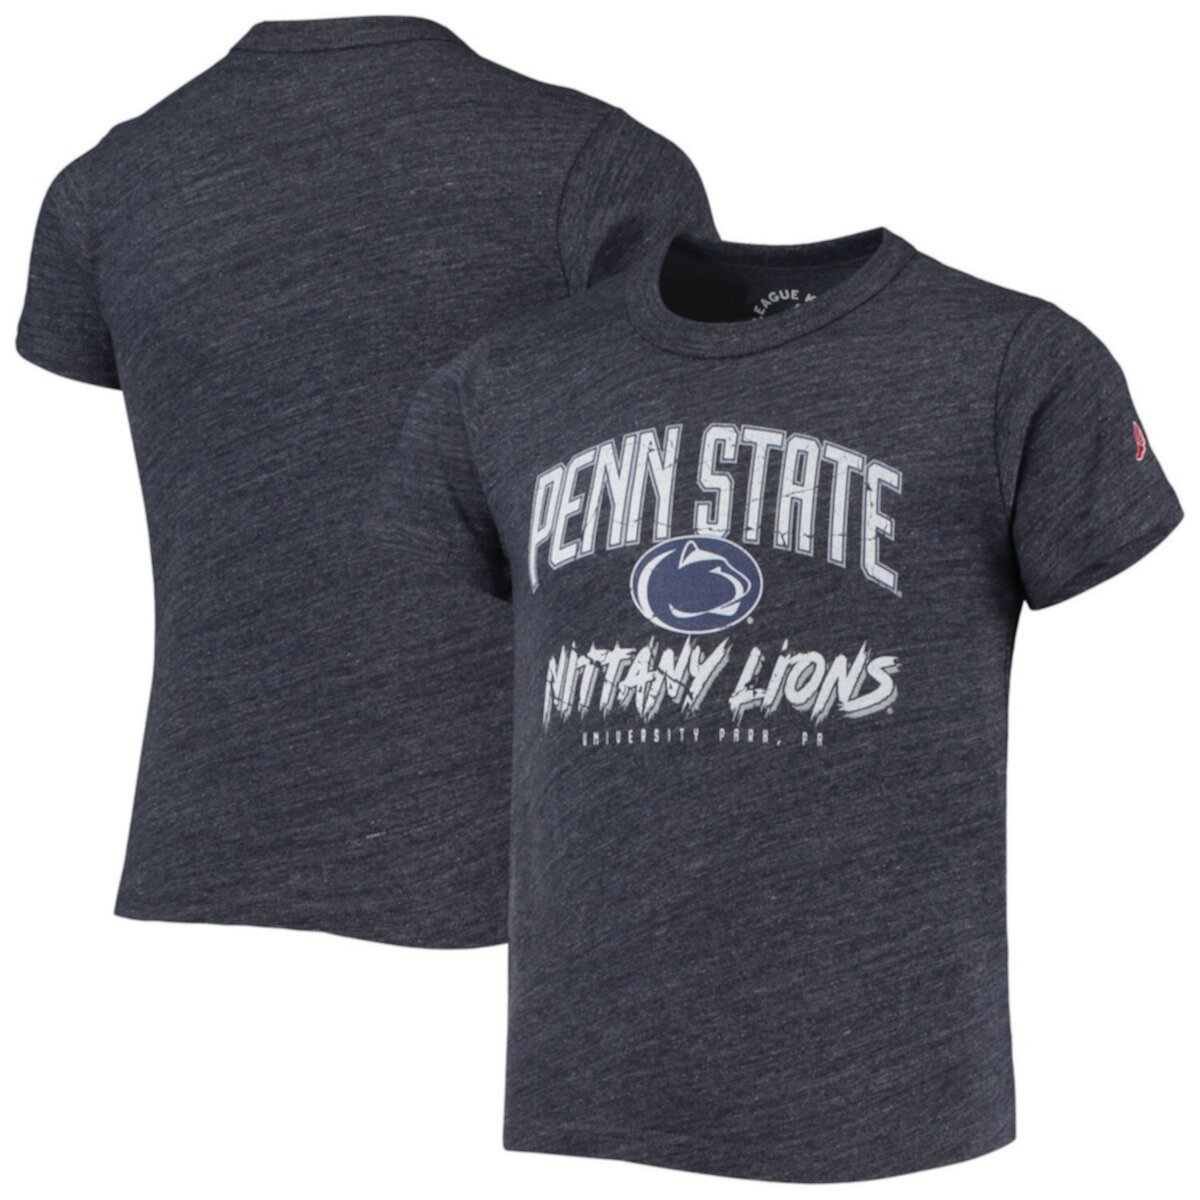 Футболка Youth League Collegiate Wear цвета темно-синего цвета Penn State Nittany Lions Victory Falls Tri-Blend Unbranded